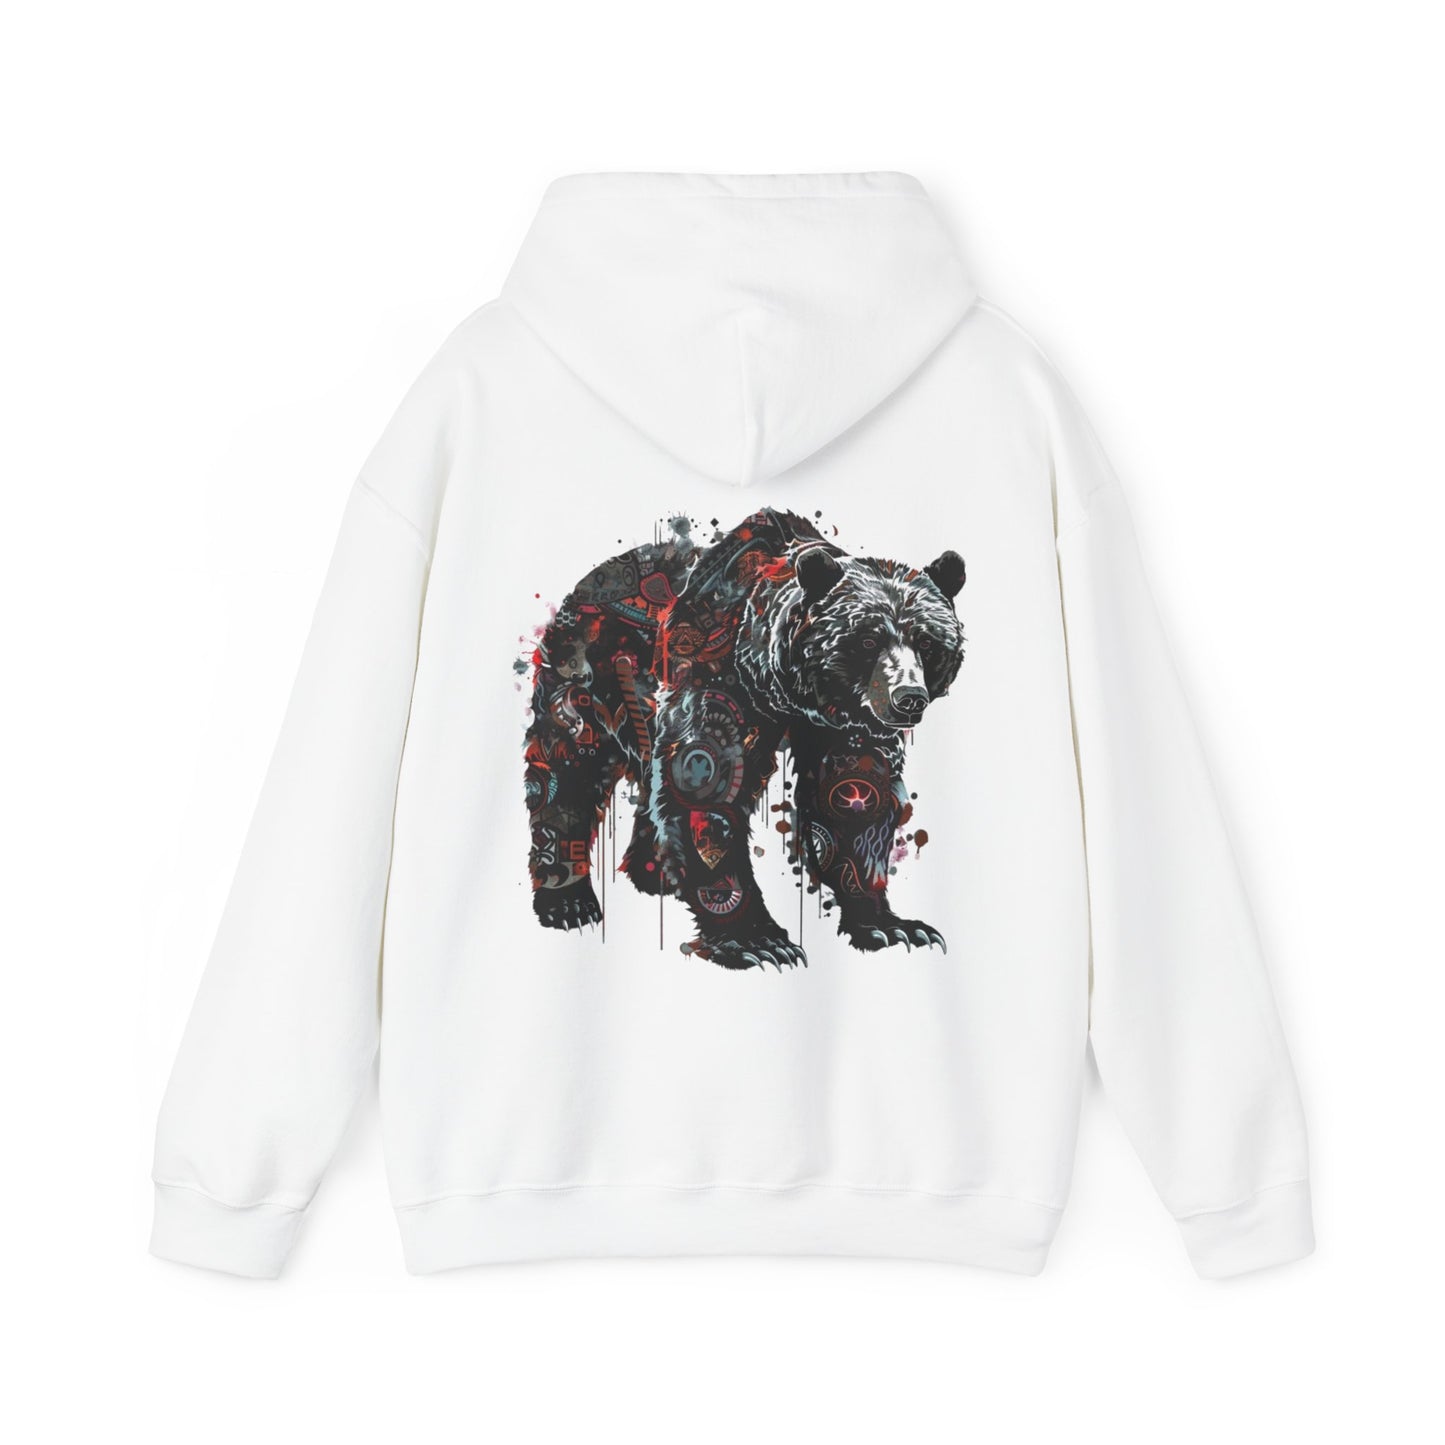 Bear Imprint Hooded Sweatshirt